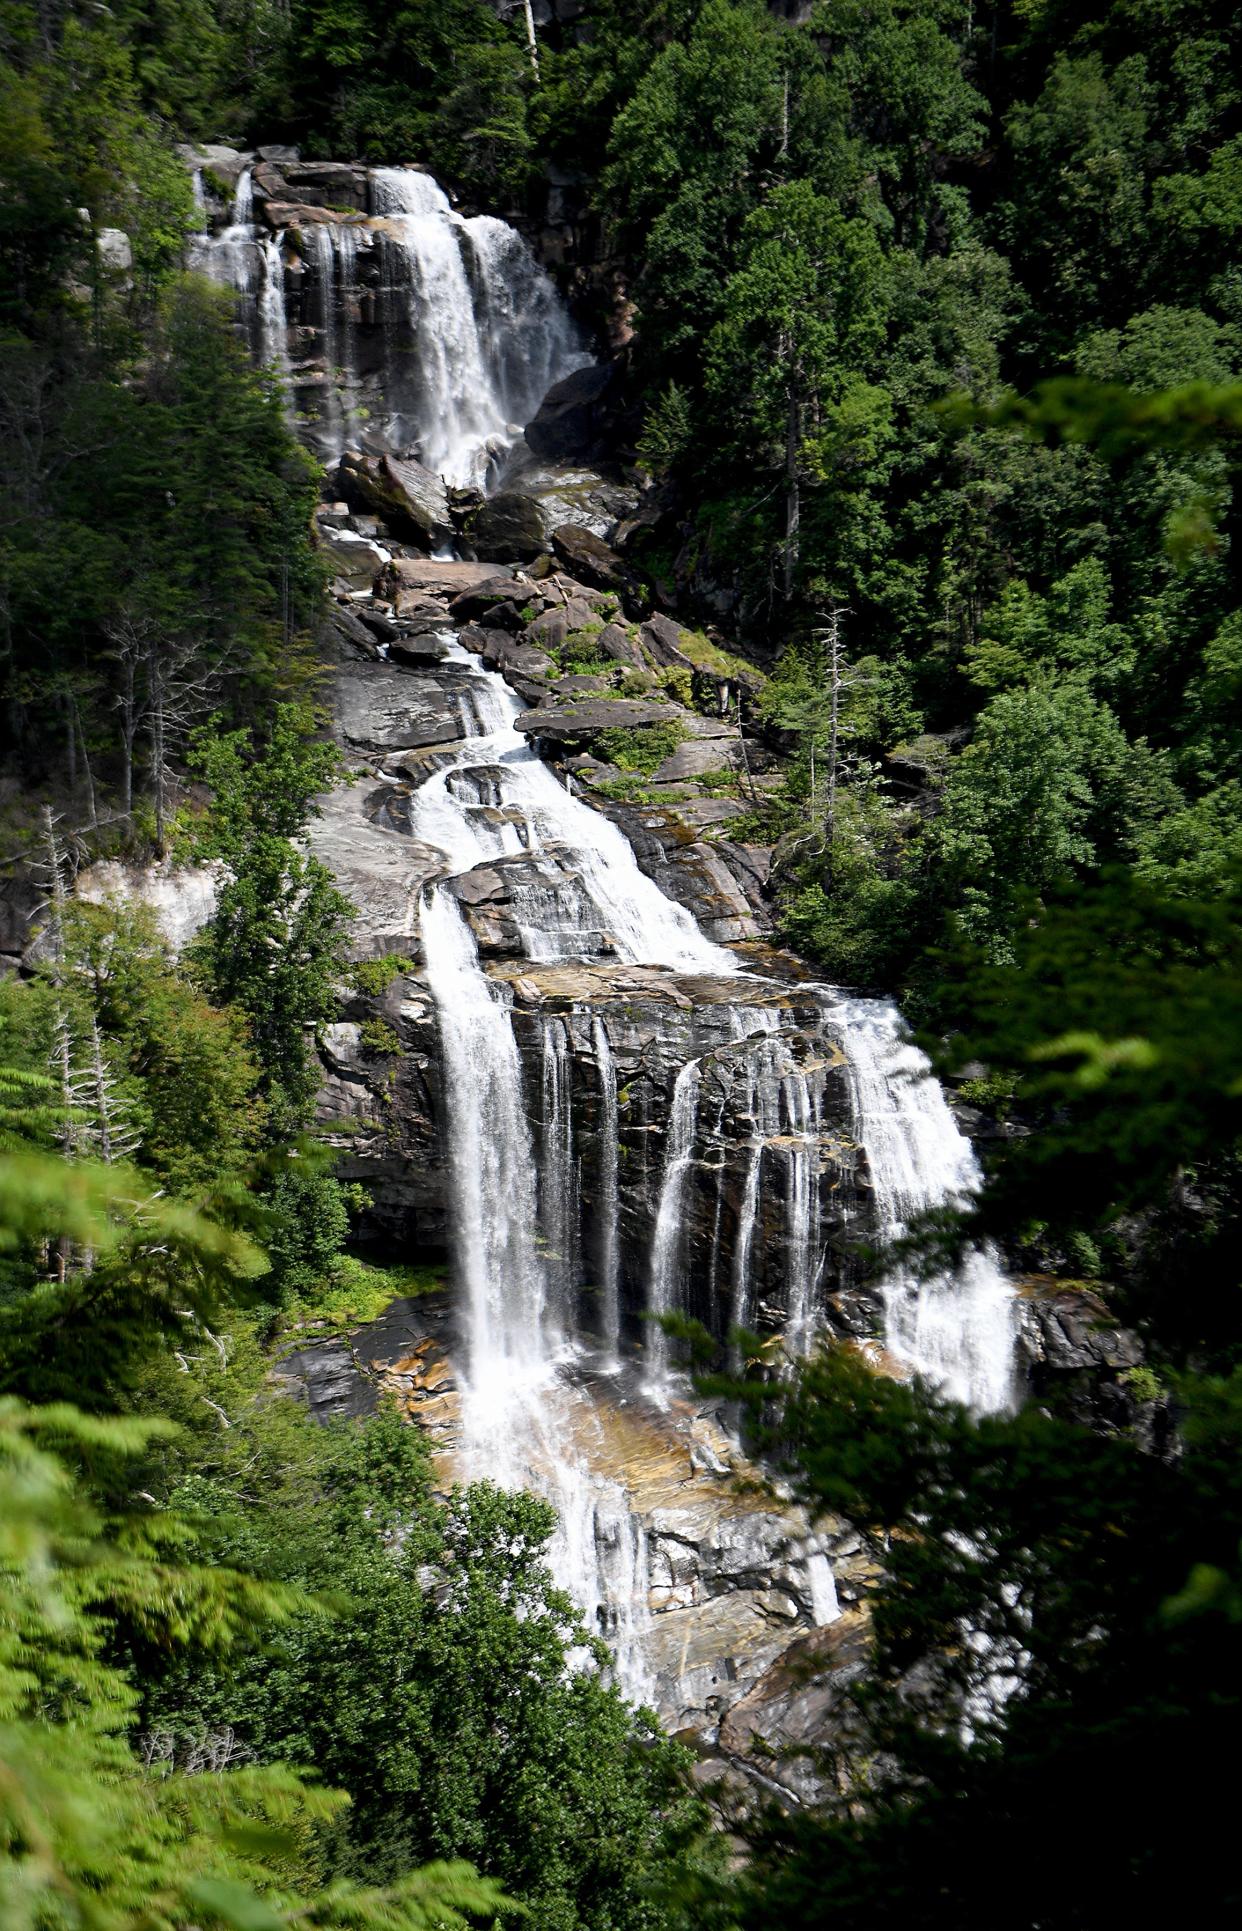 Whitewater Falls in Nantahala National Forest.